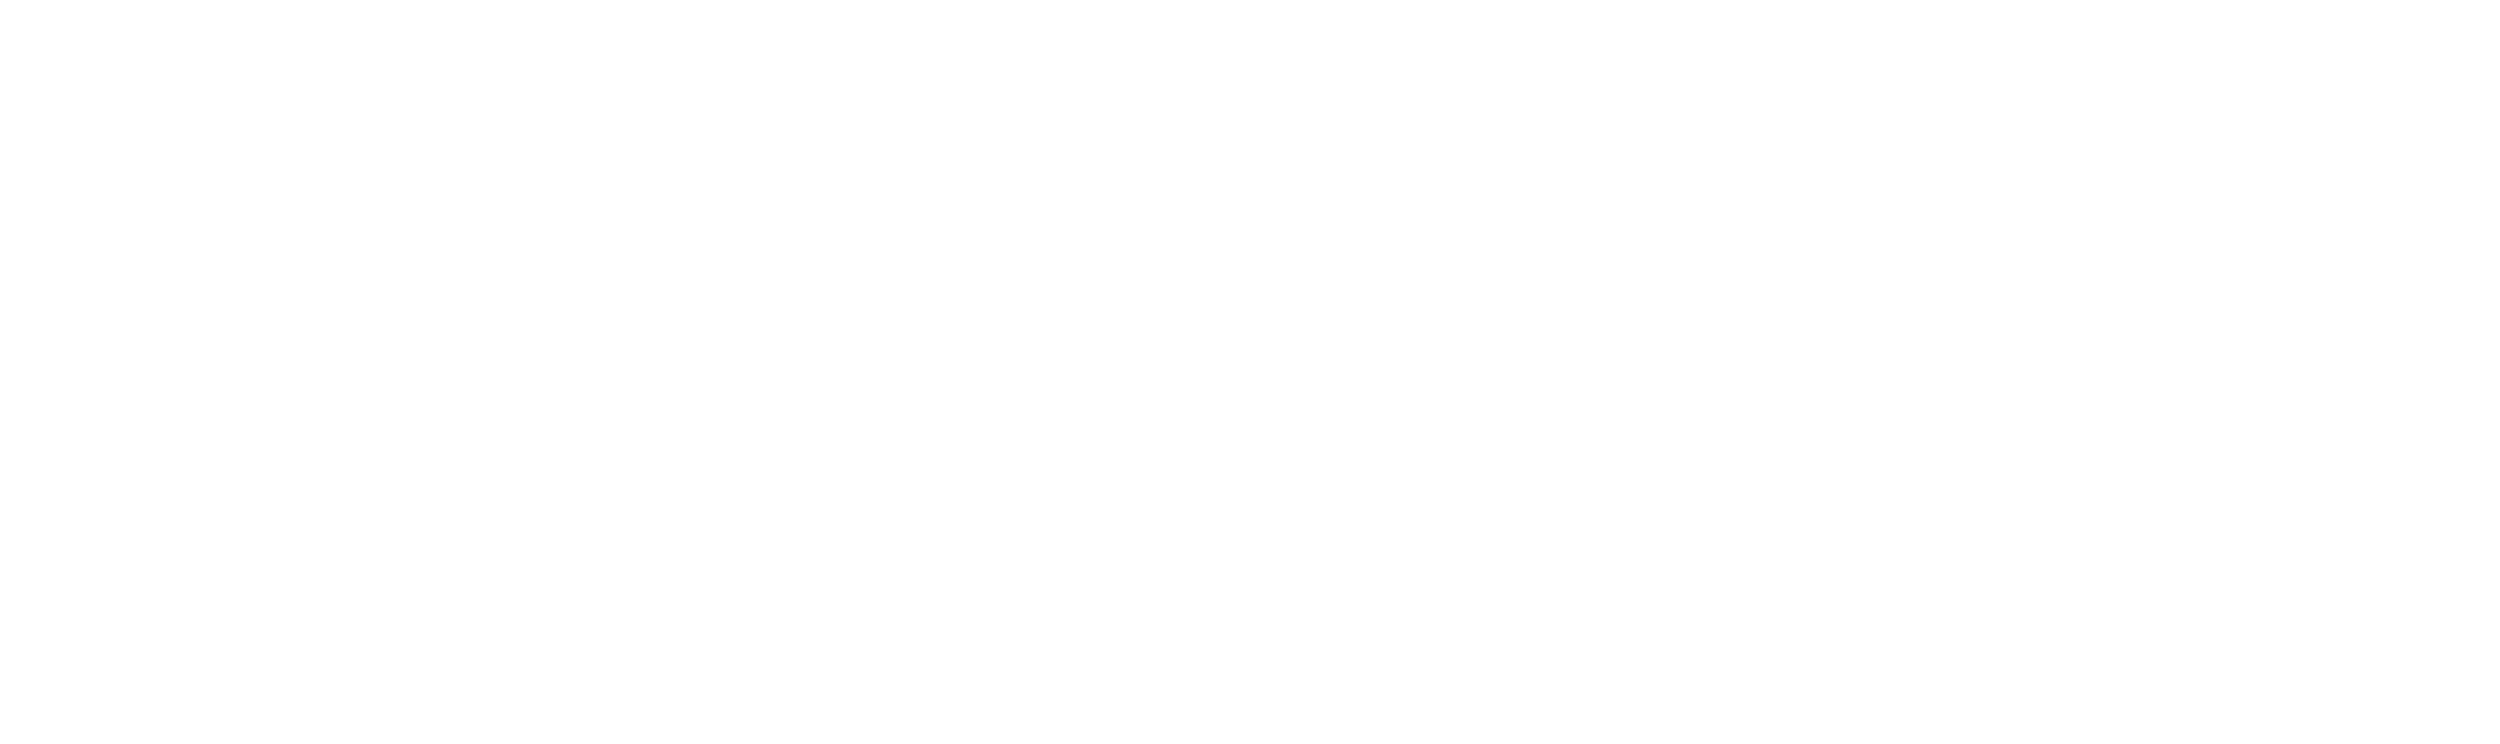 Tiny by Taylor